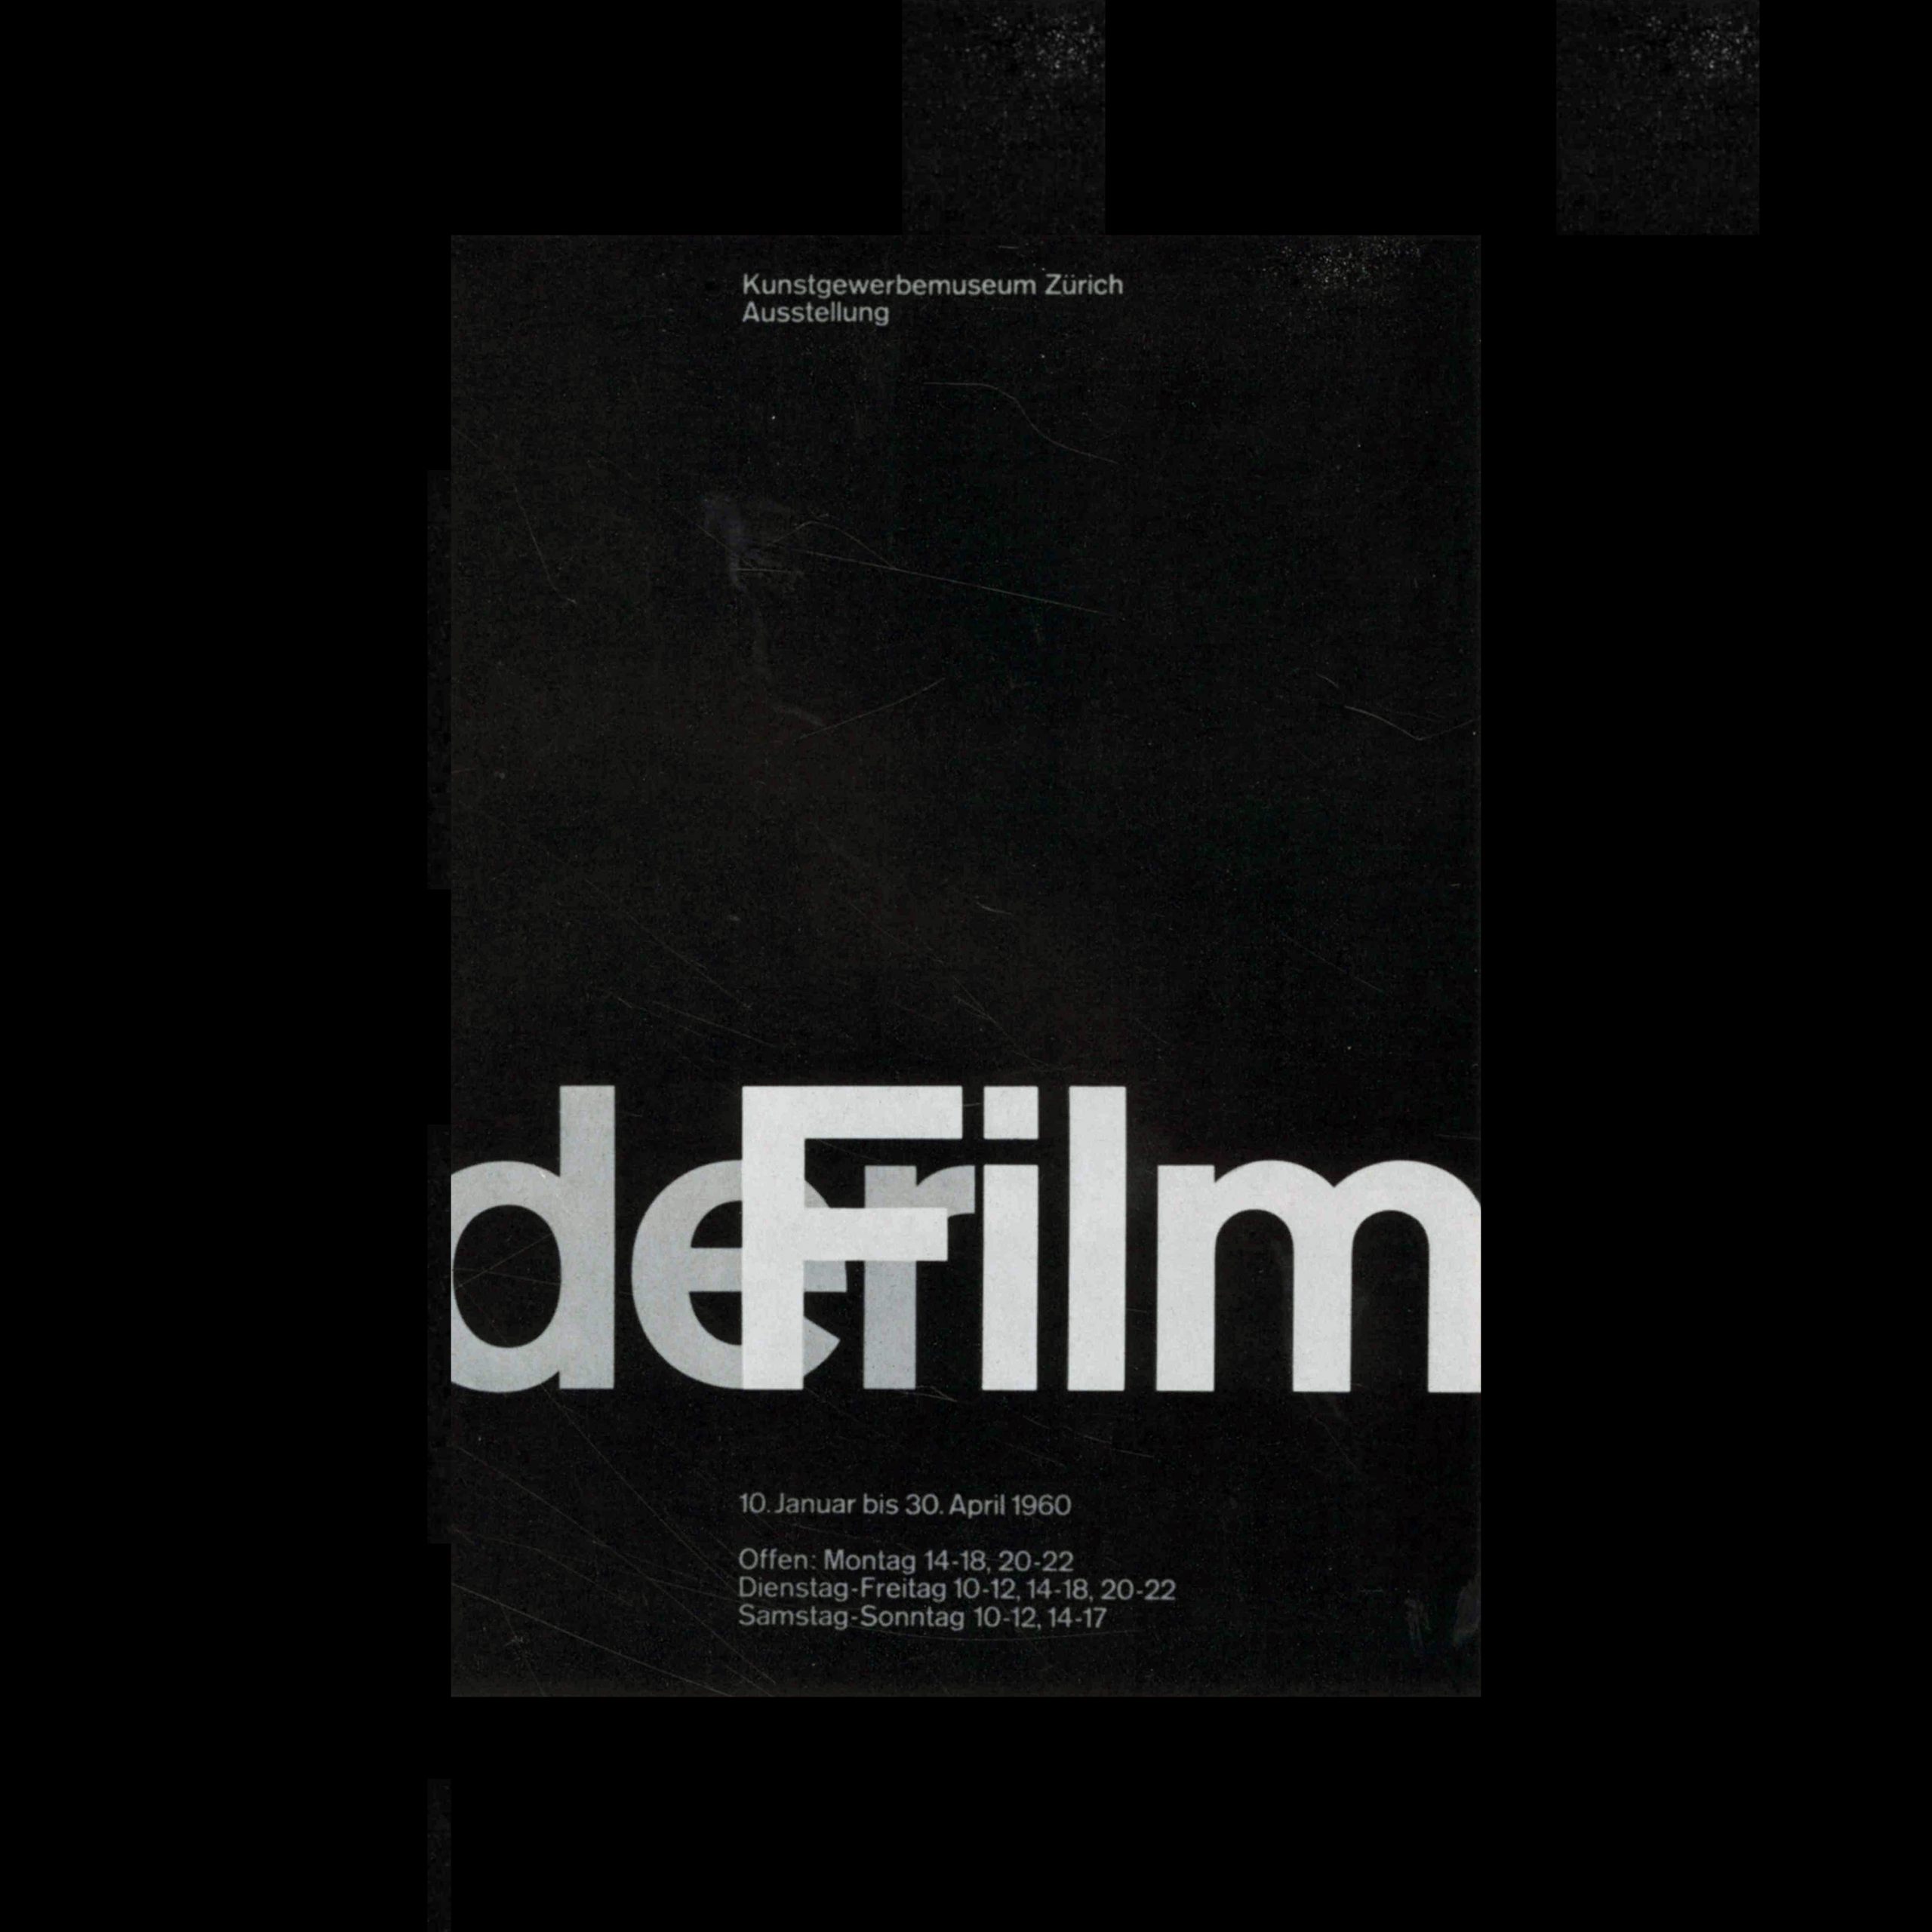 Poster for a Film Exhibition at the Kunstgewerbemuseum, Zürich designed by Josef Müller-Brockmann